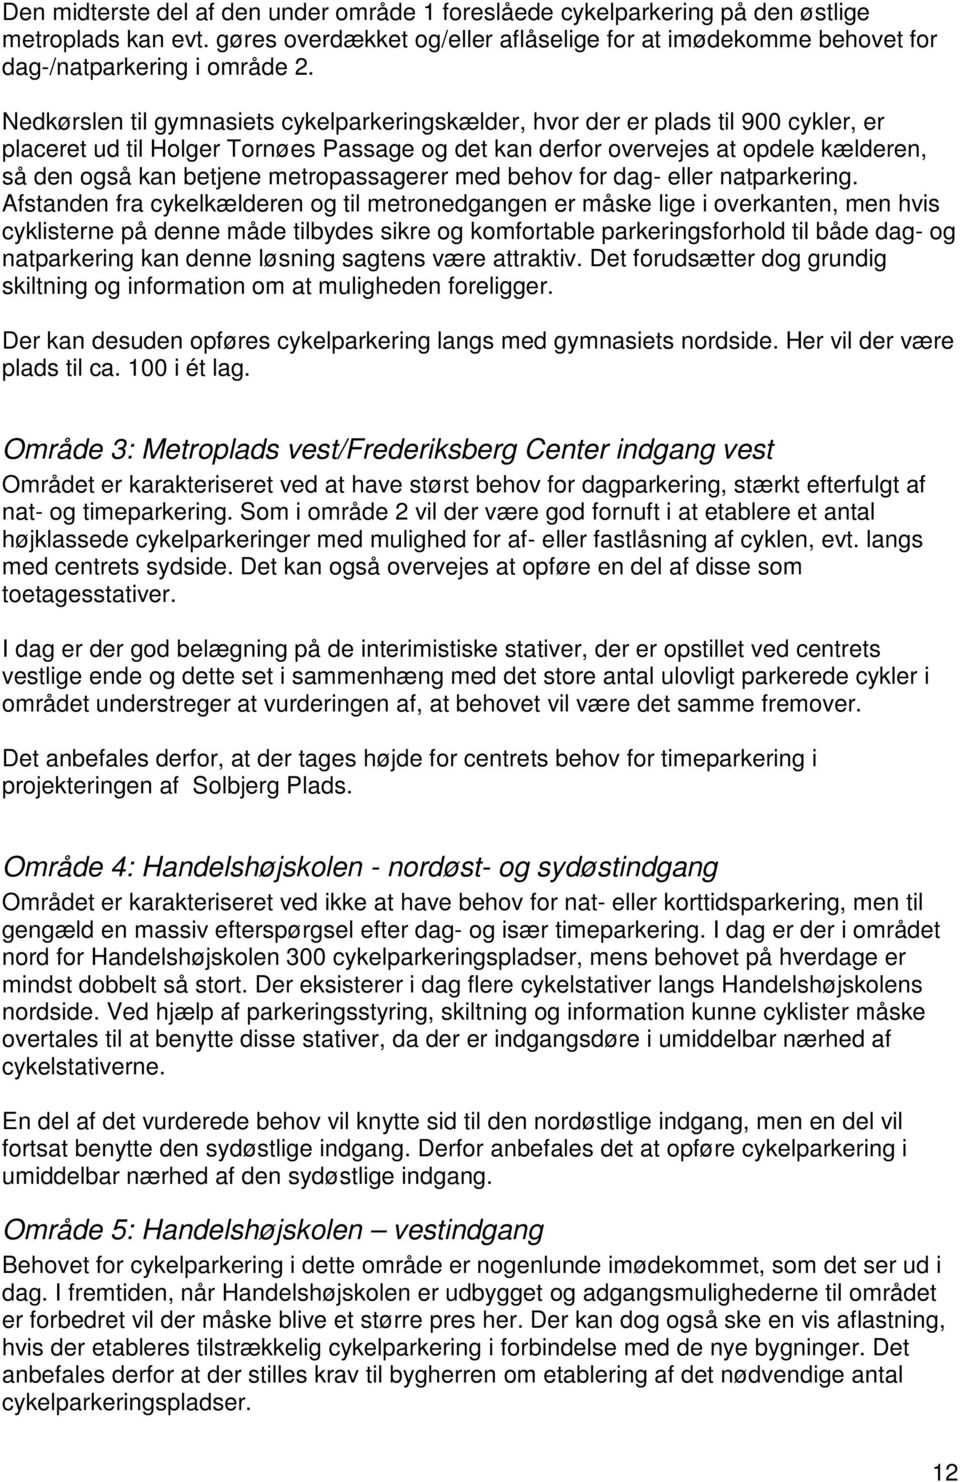 Cykelparkering Frederiksberg Bymidte - PDF Free Download